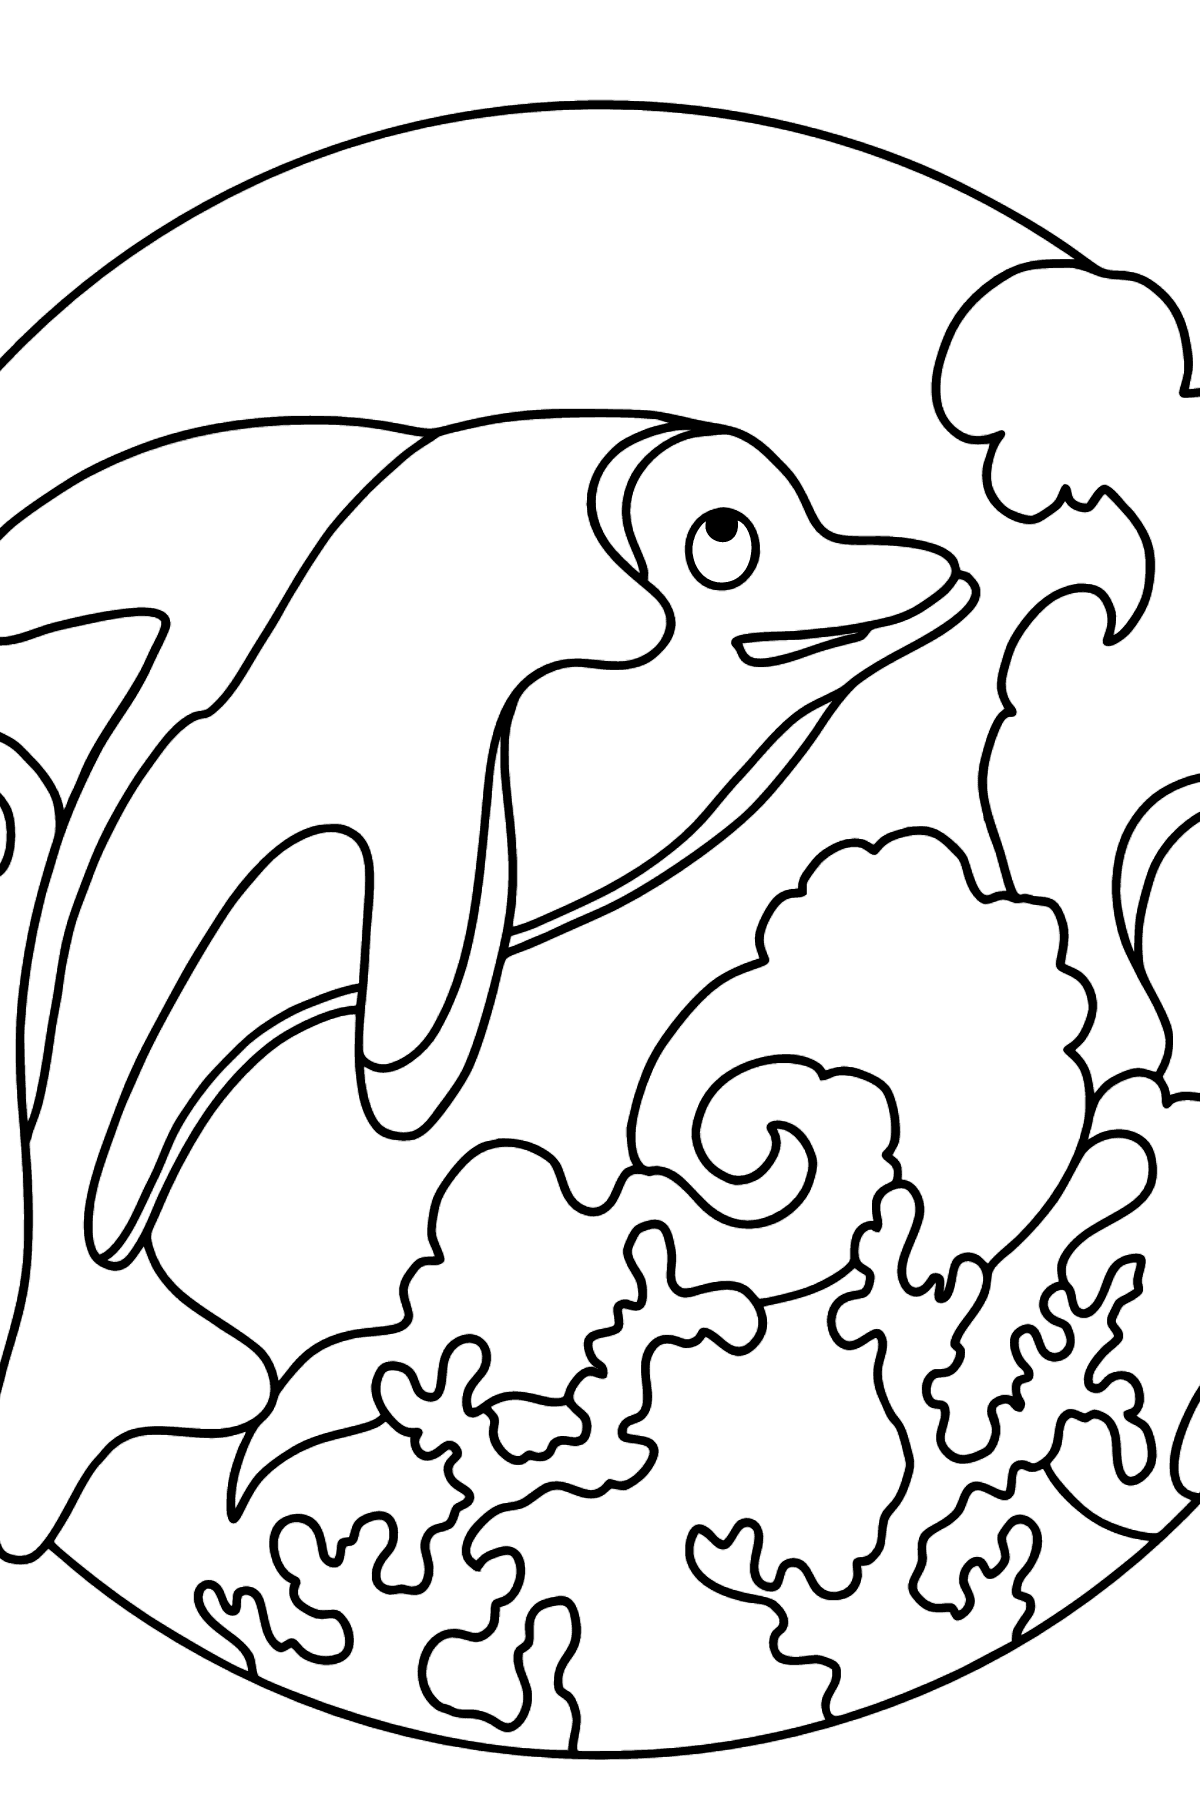 Розмальовка Дельфін для дітей - Розмальовки для дітей